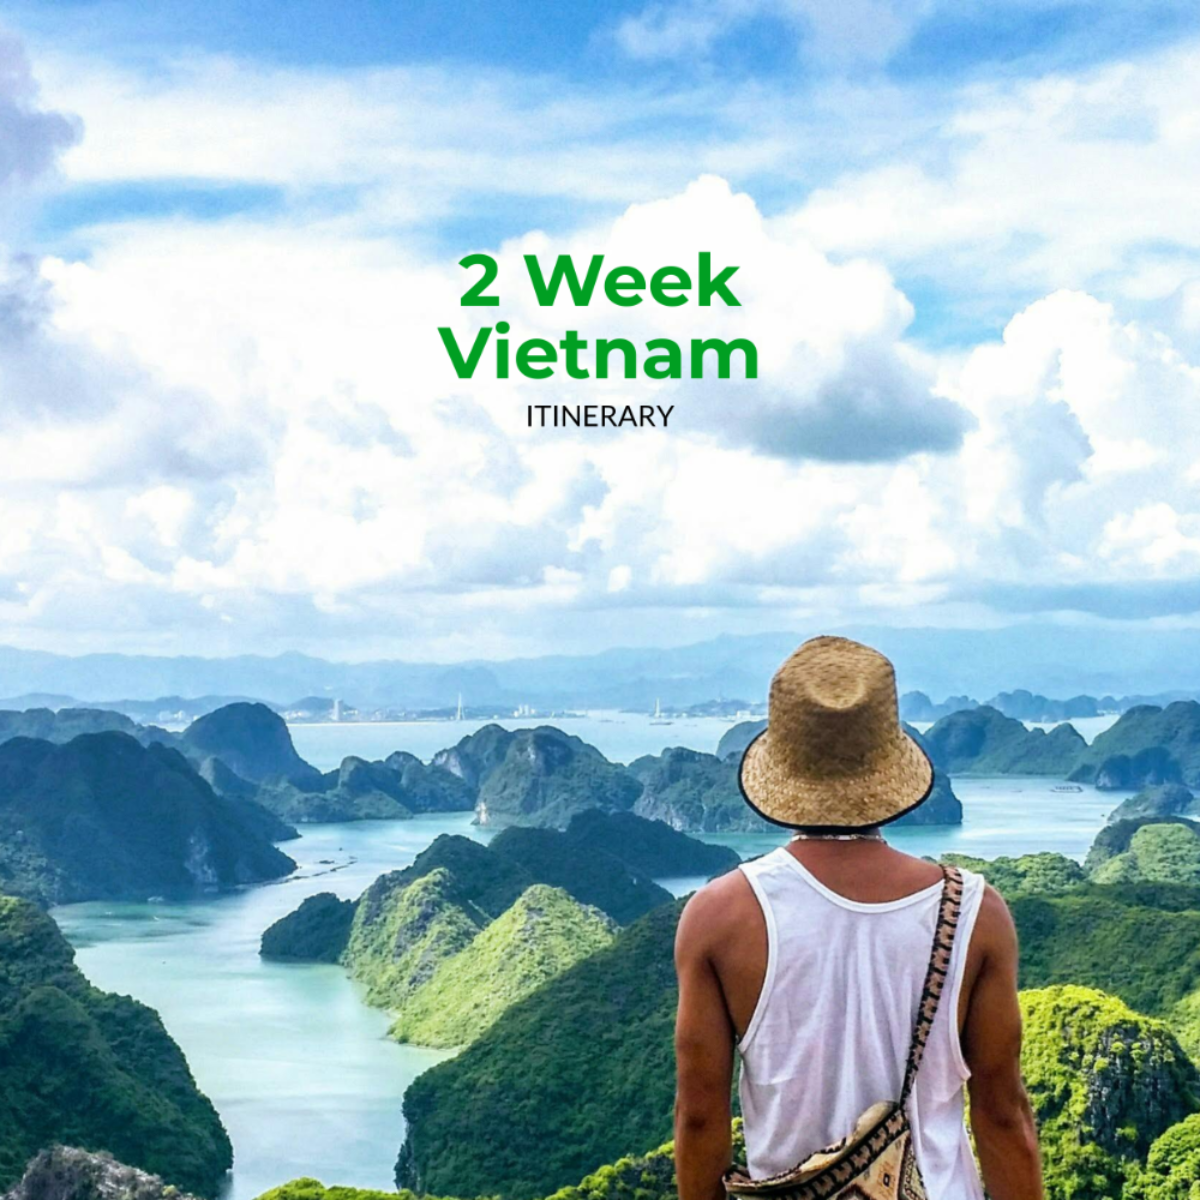 2 Week Vietnam Itinerary Template